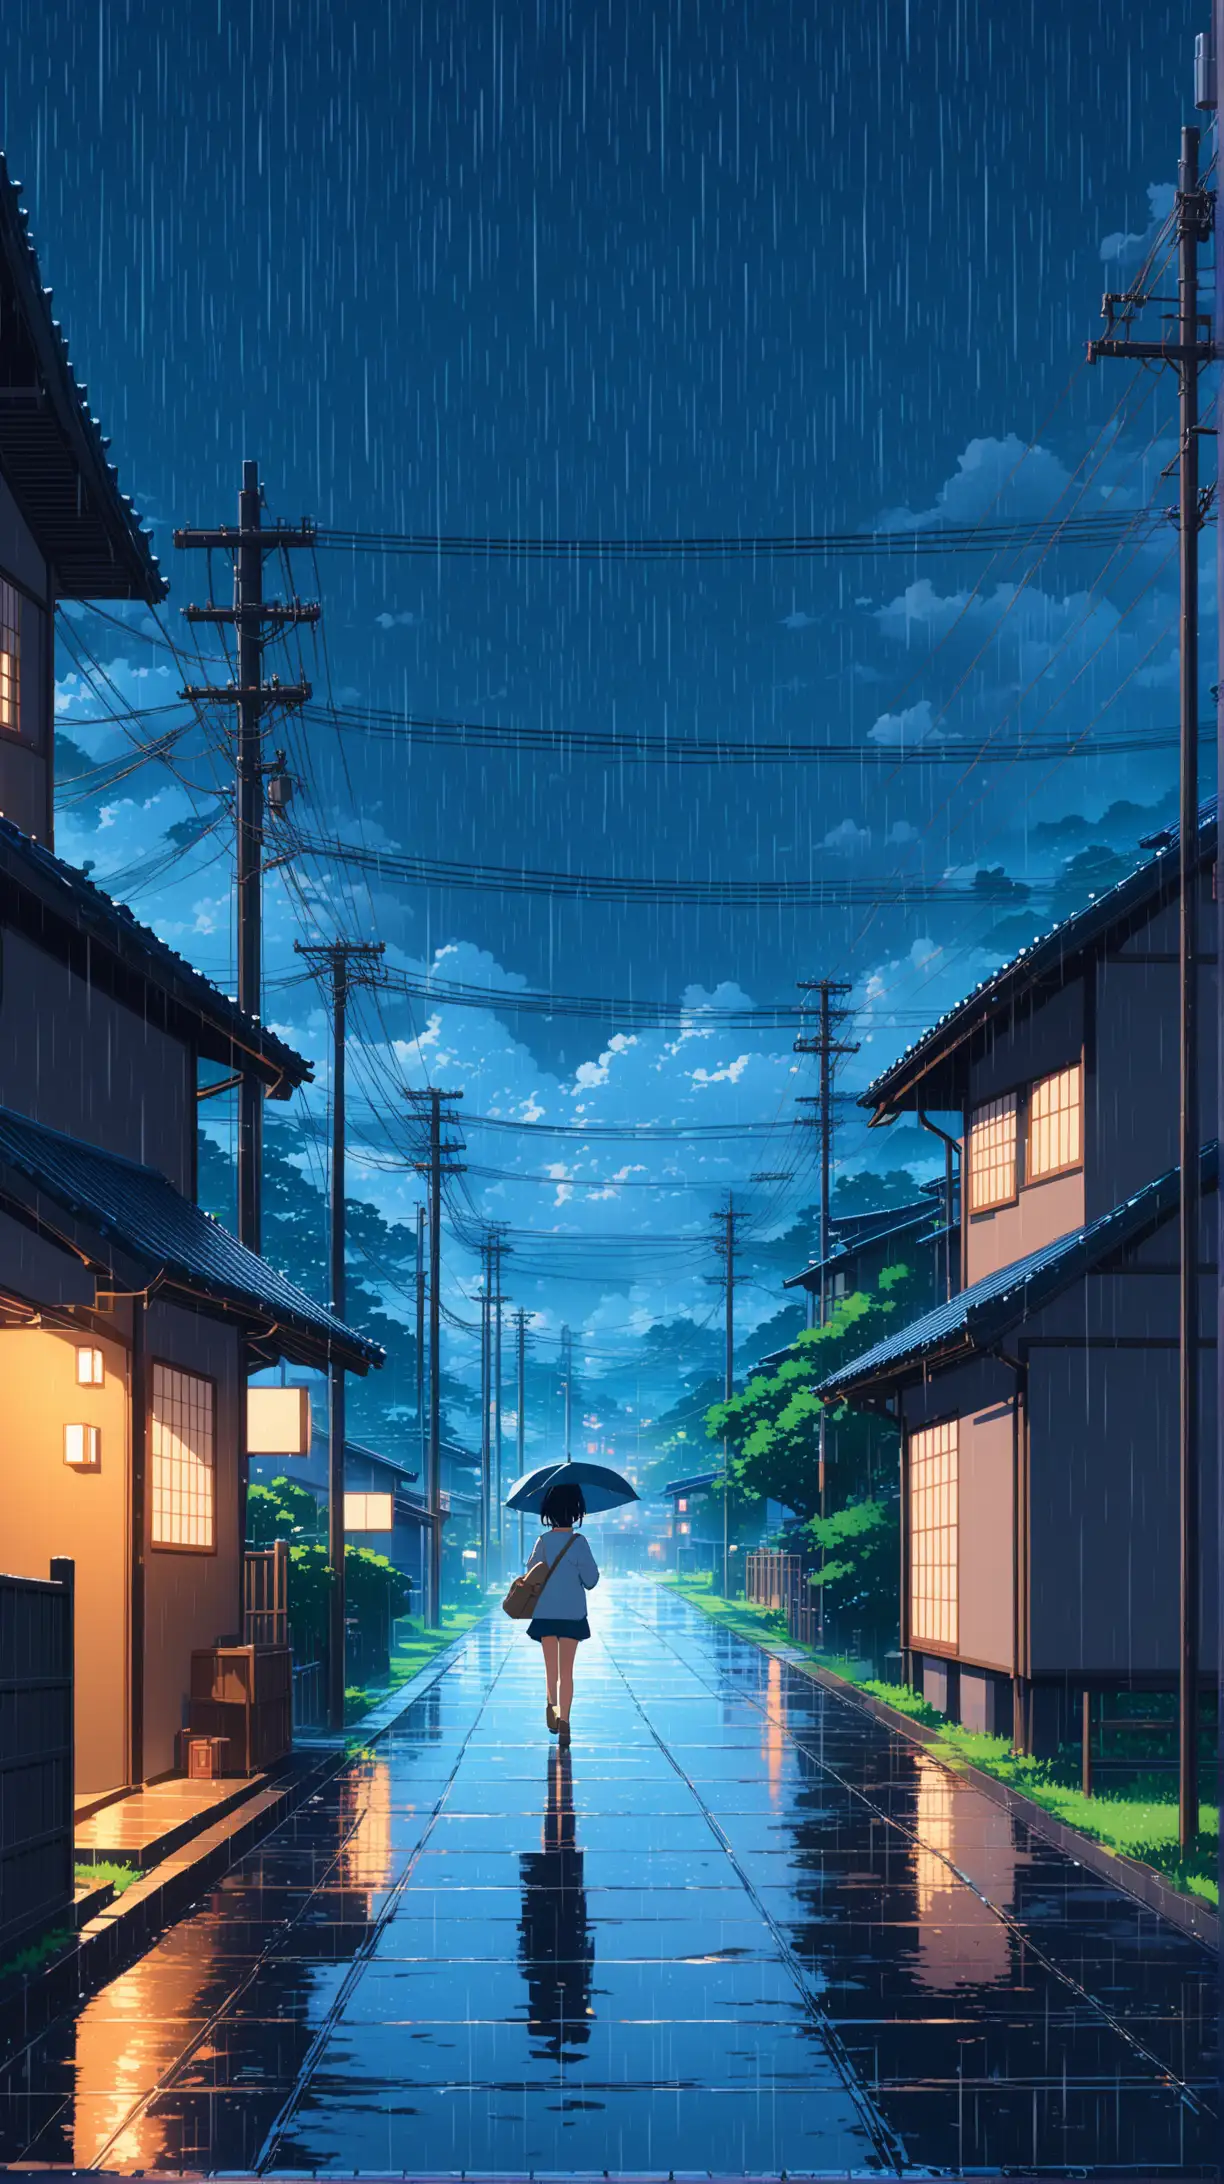 Tranquil Japan School Girl Walking in Rain in Beautiful Illuminated City Suburb